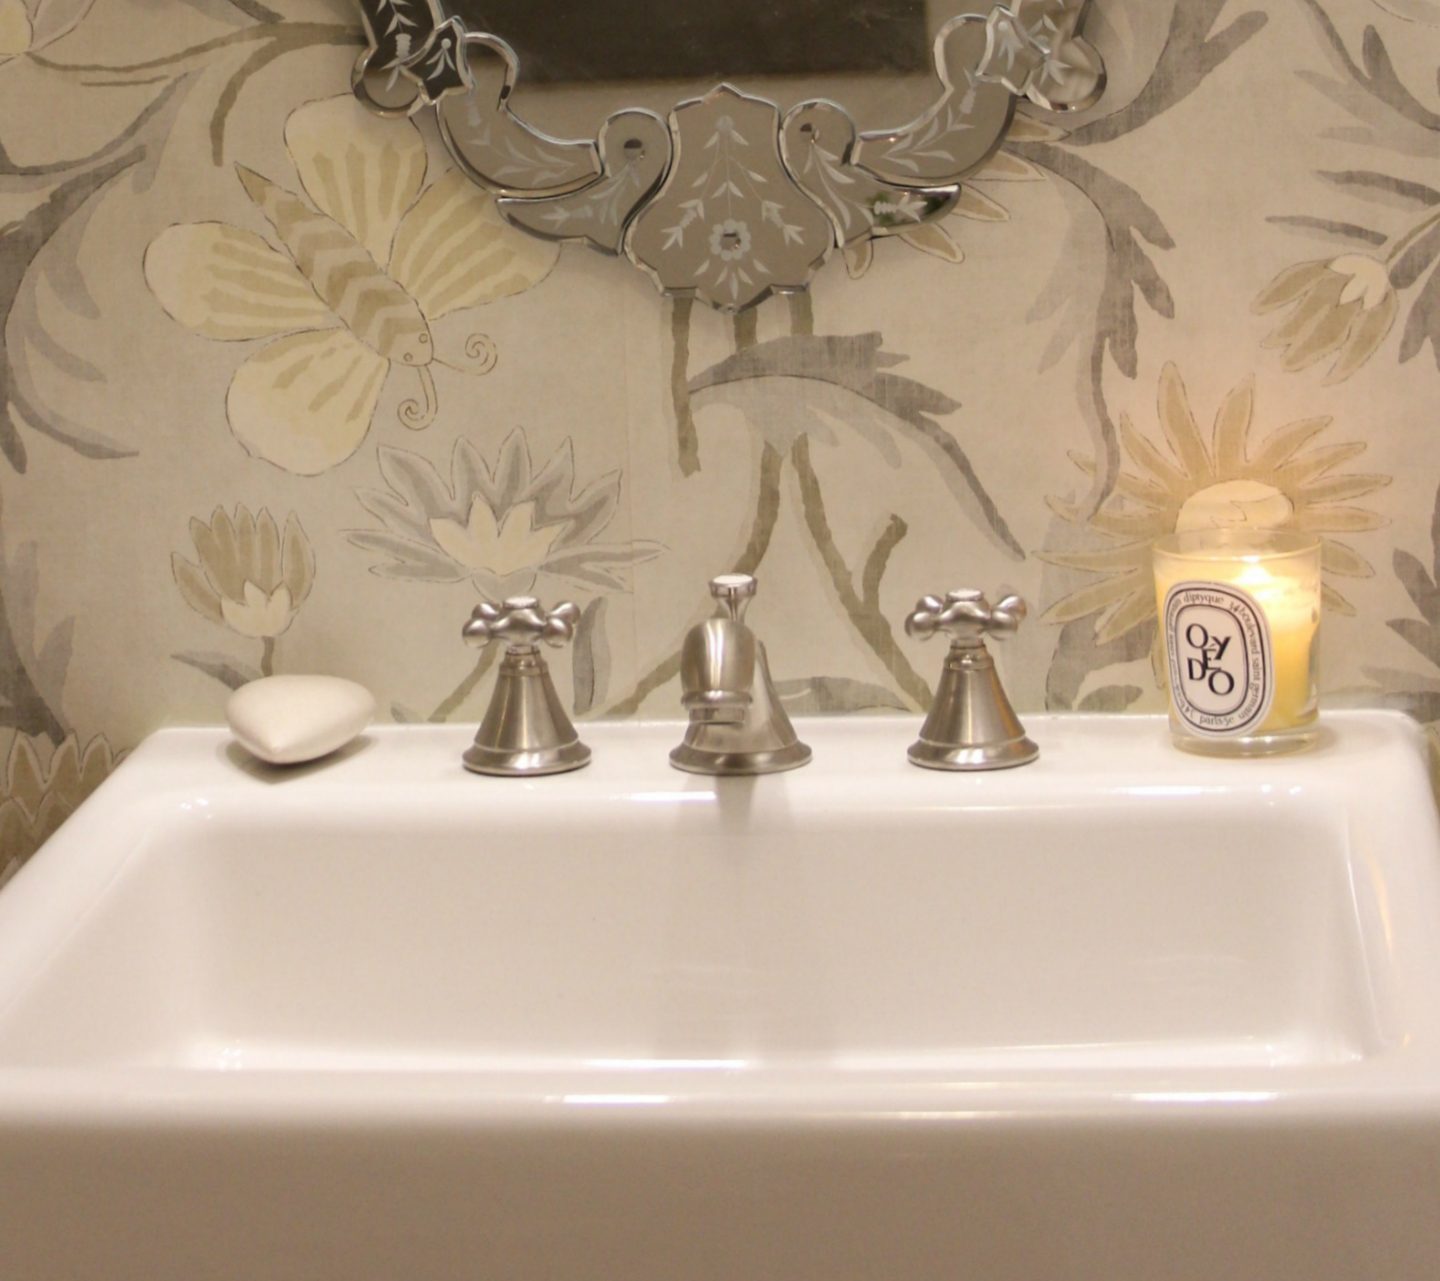 Classic bathroom design with fireclay farmhouse sink, brushed nickel faucet, Venetian mirror, and light grey wallpaper with butterflies. #DIYbathroom #bathroomdesign #farmsink